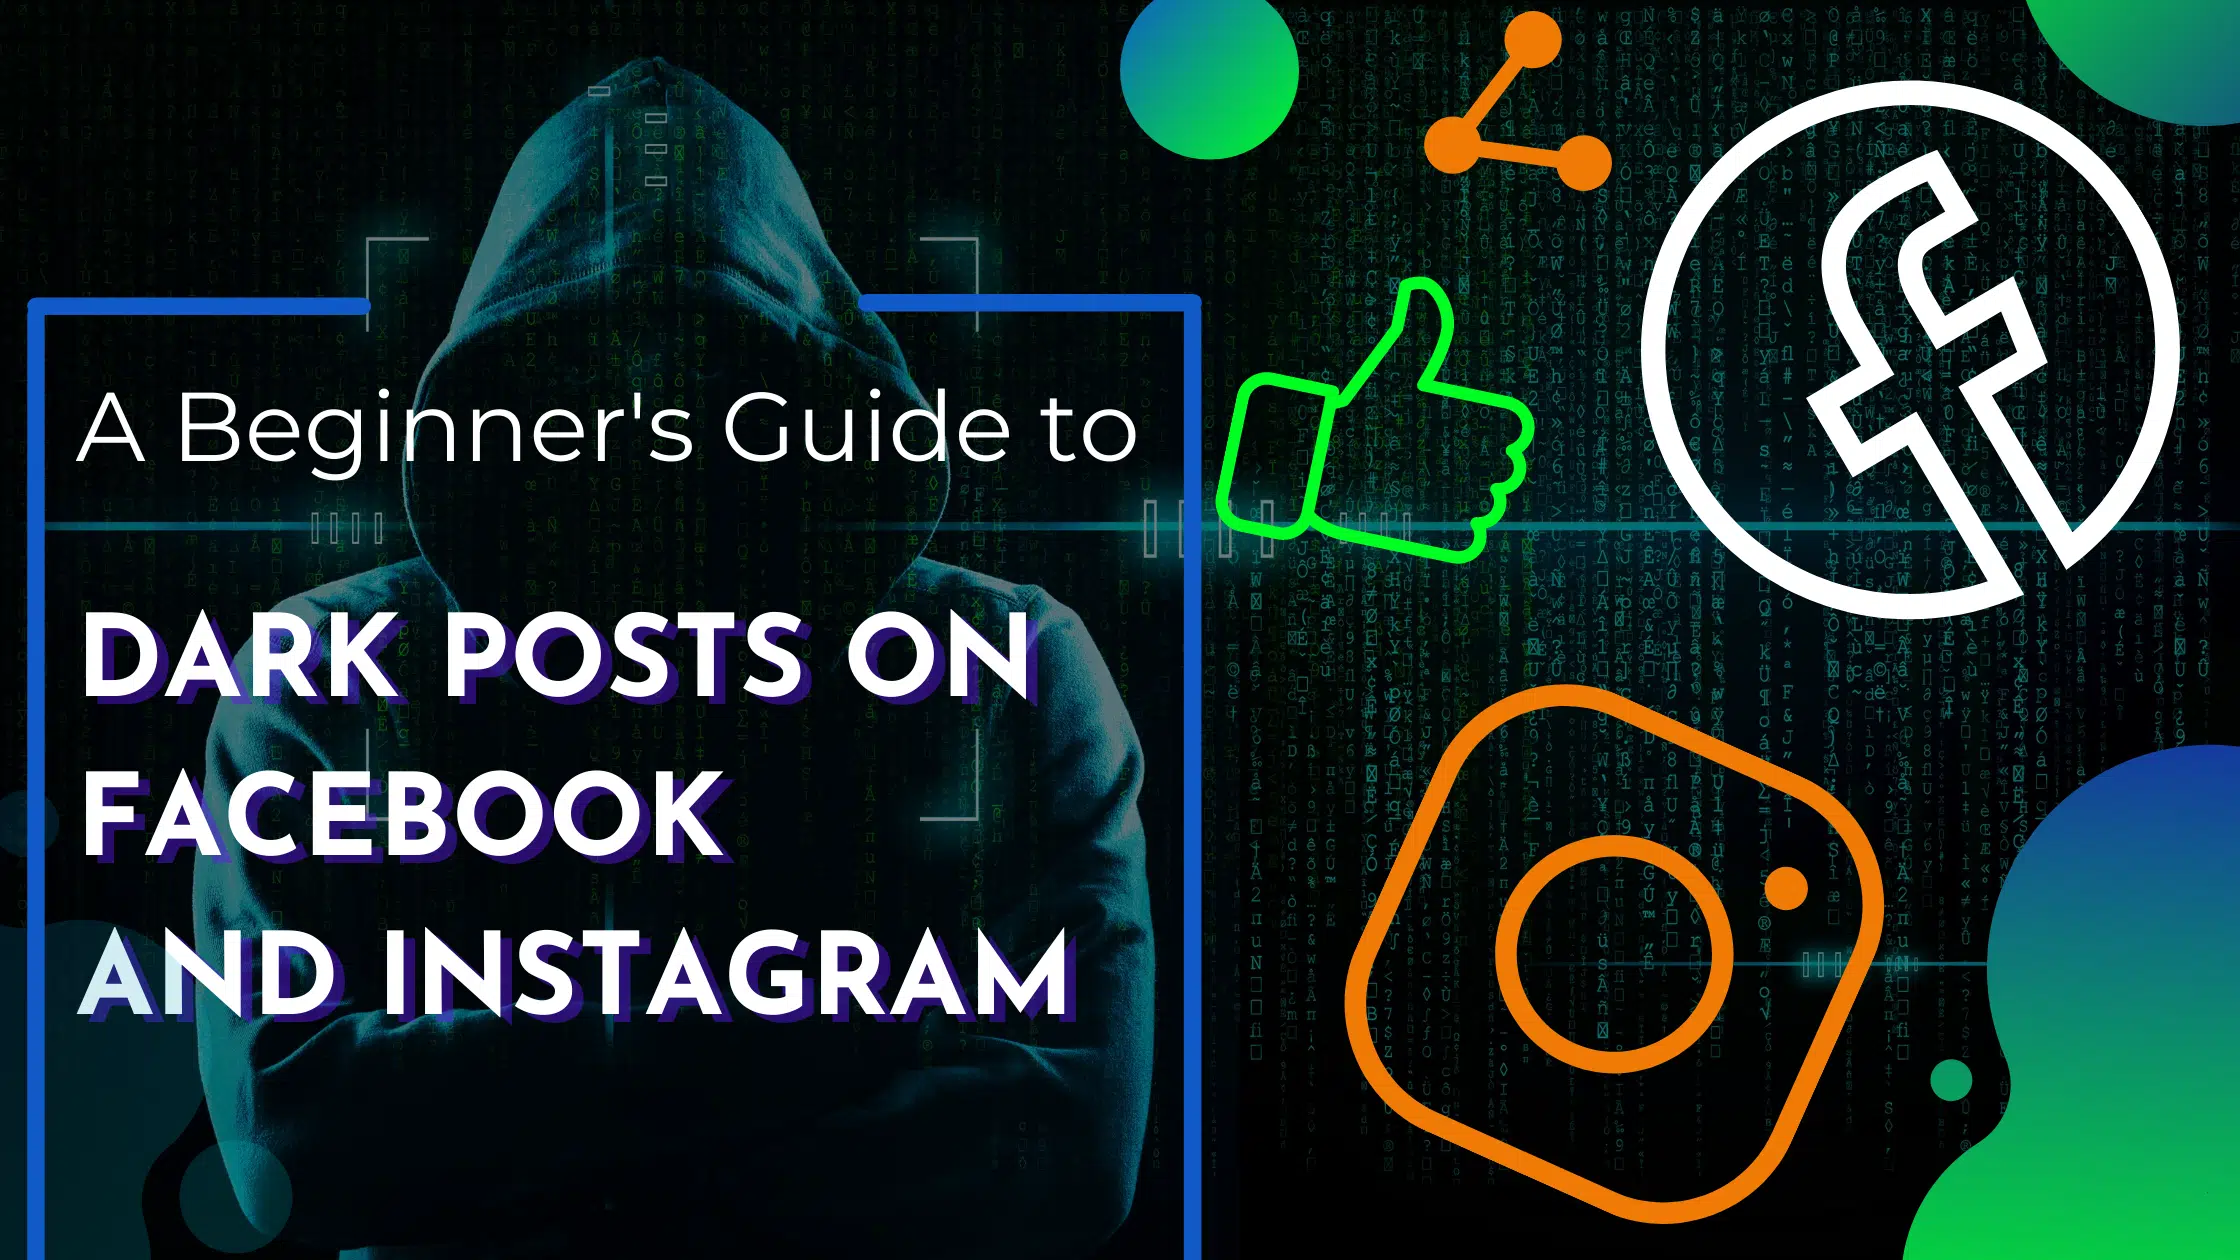 dark posts on facebook and instagram graphic